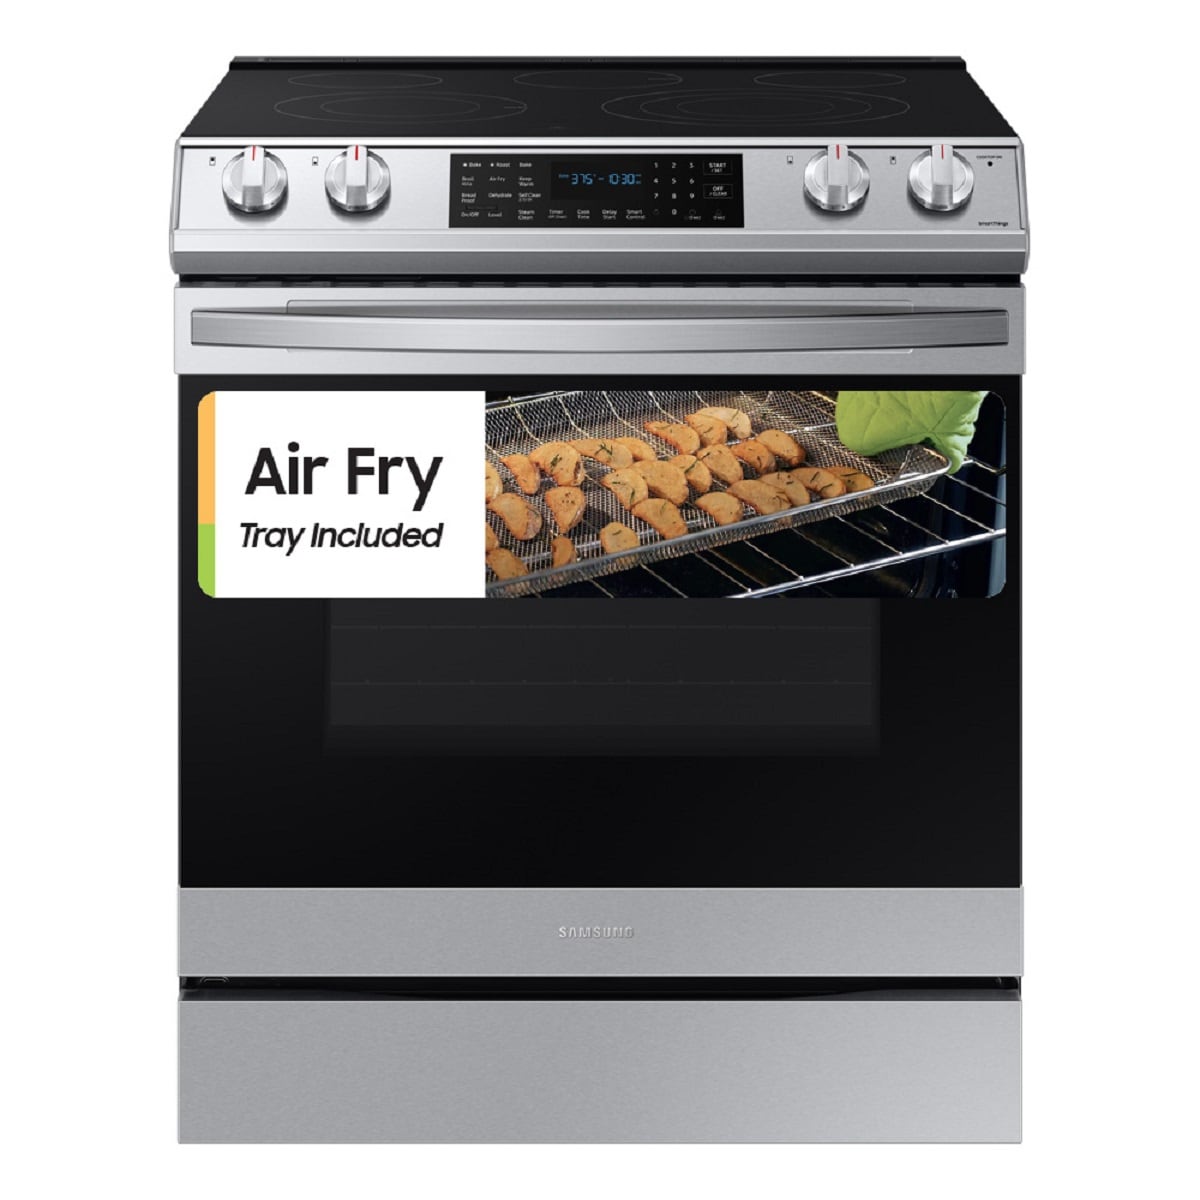  Samsung Oven Air Fryer Basket